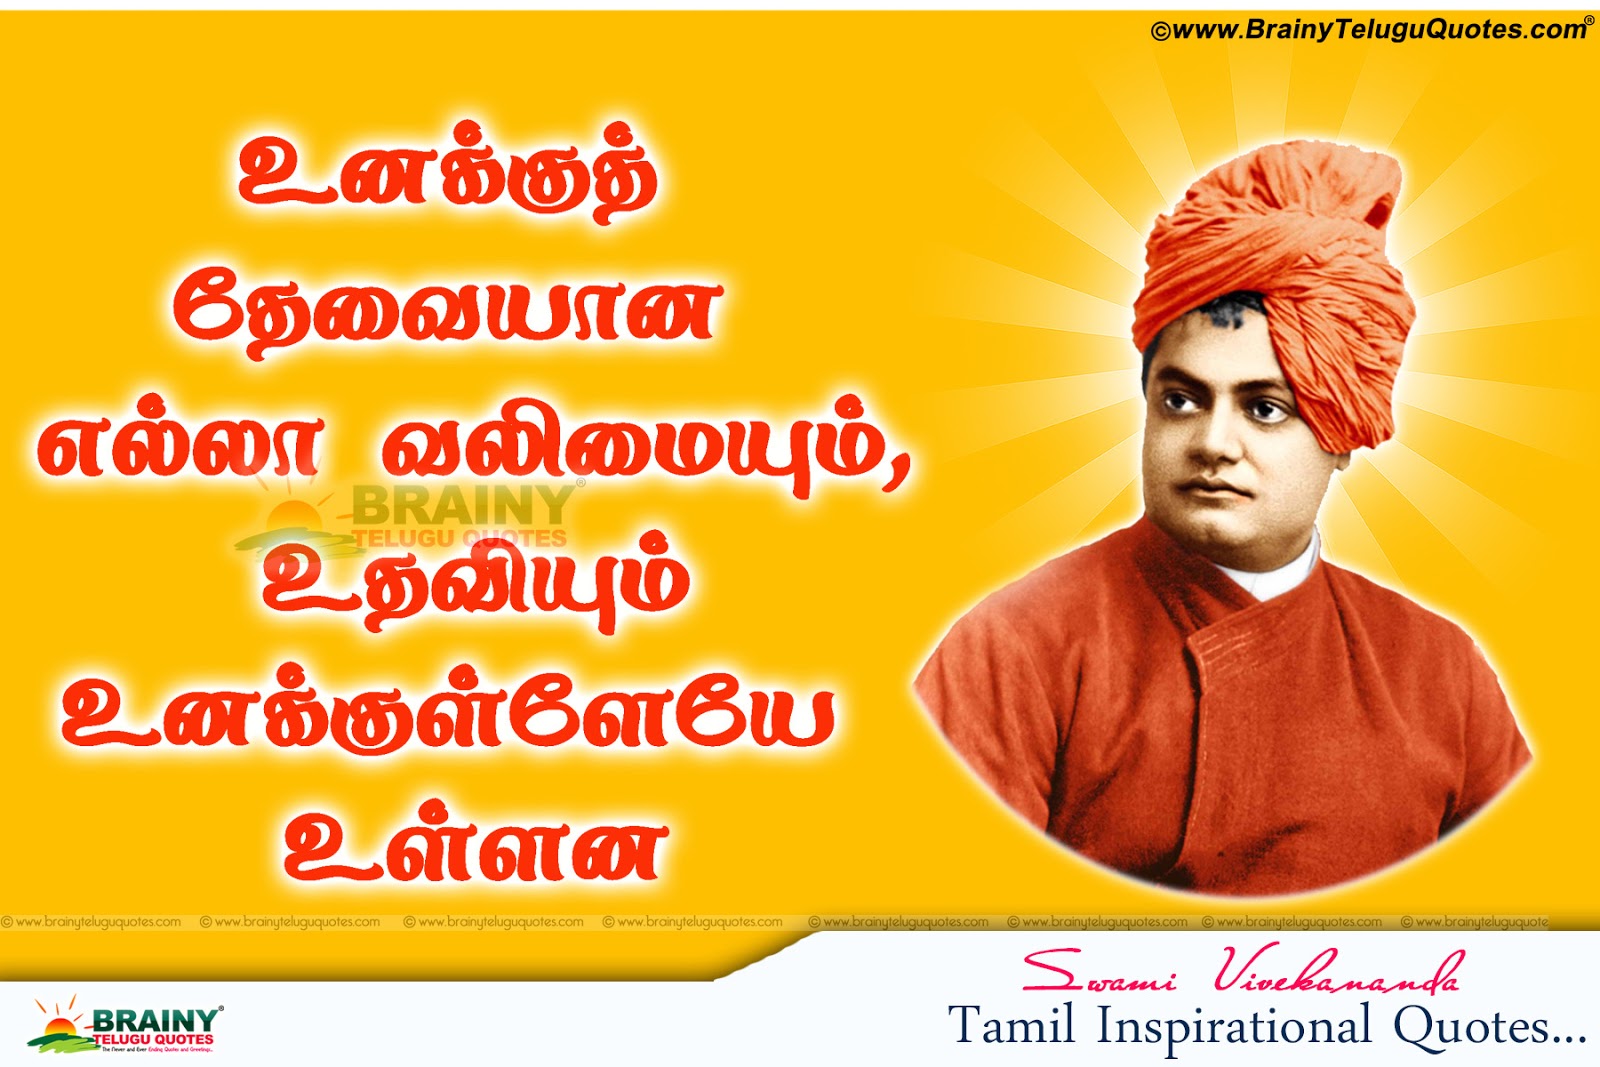 Swami Vivekanandar Tamil Inspiring Quotations and Good Lines Words